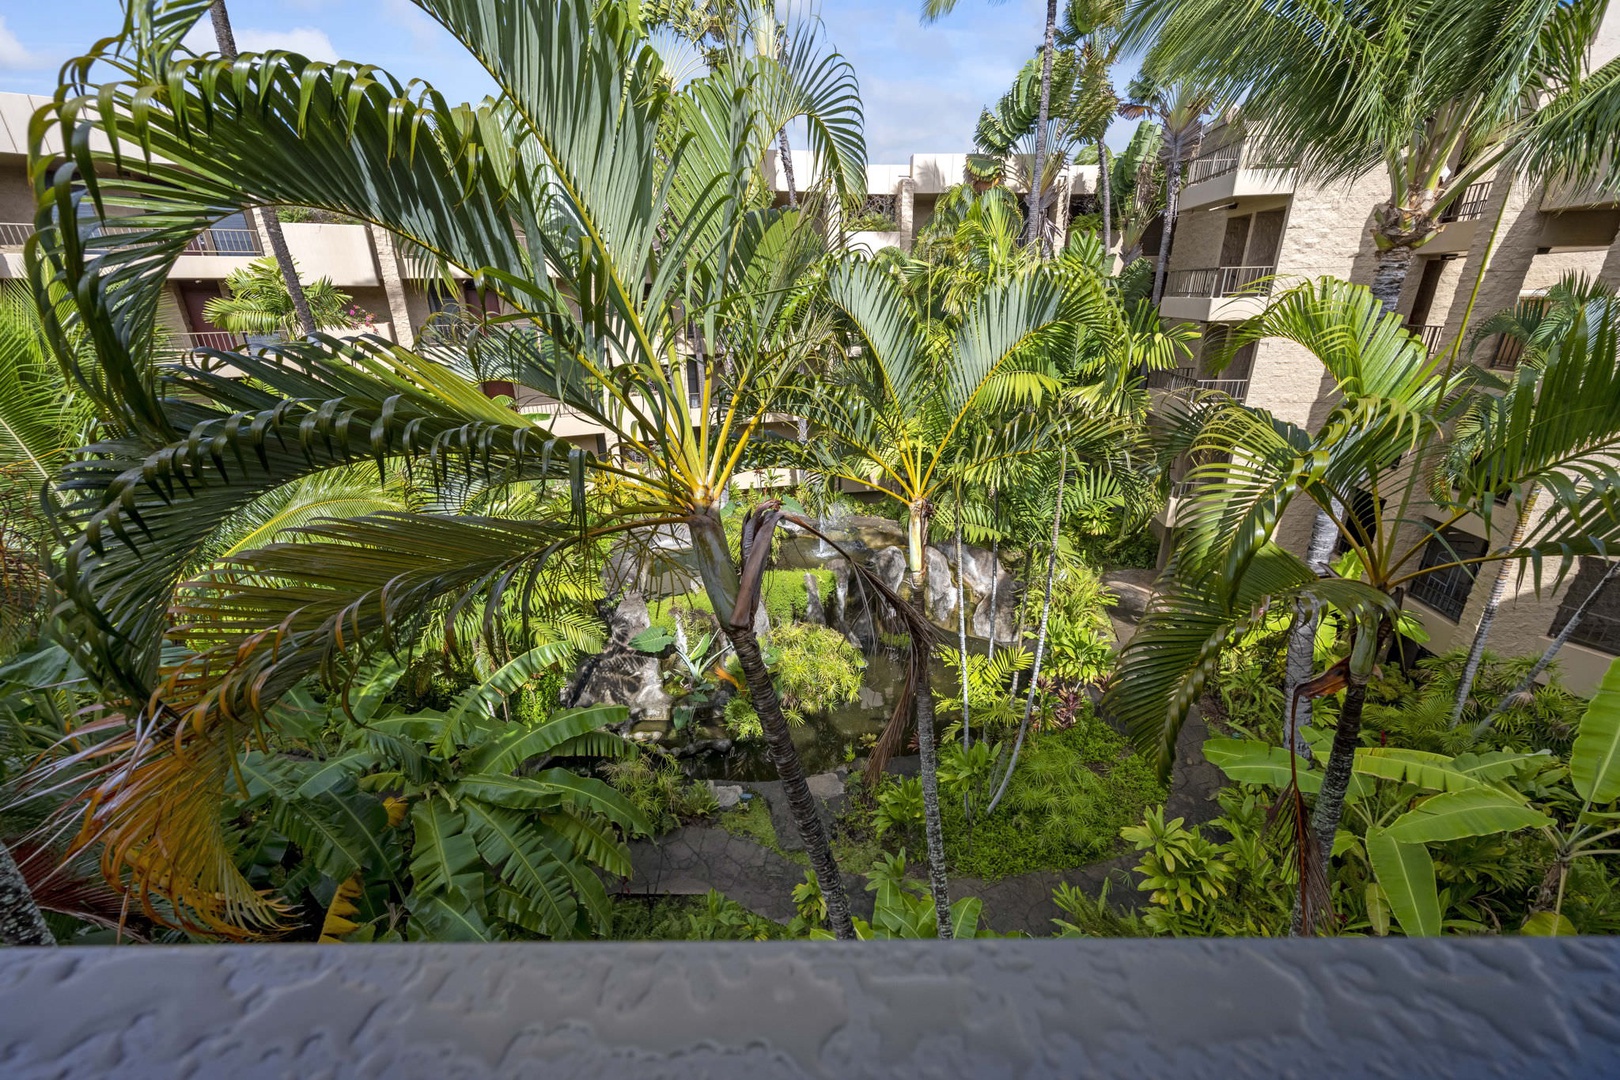 Tropical communal courtyard views from the lanai